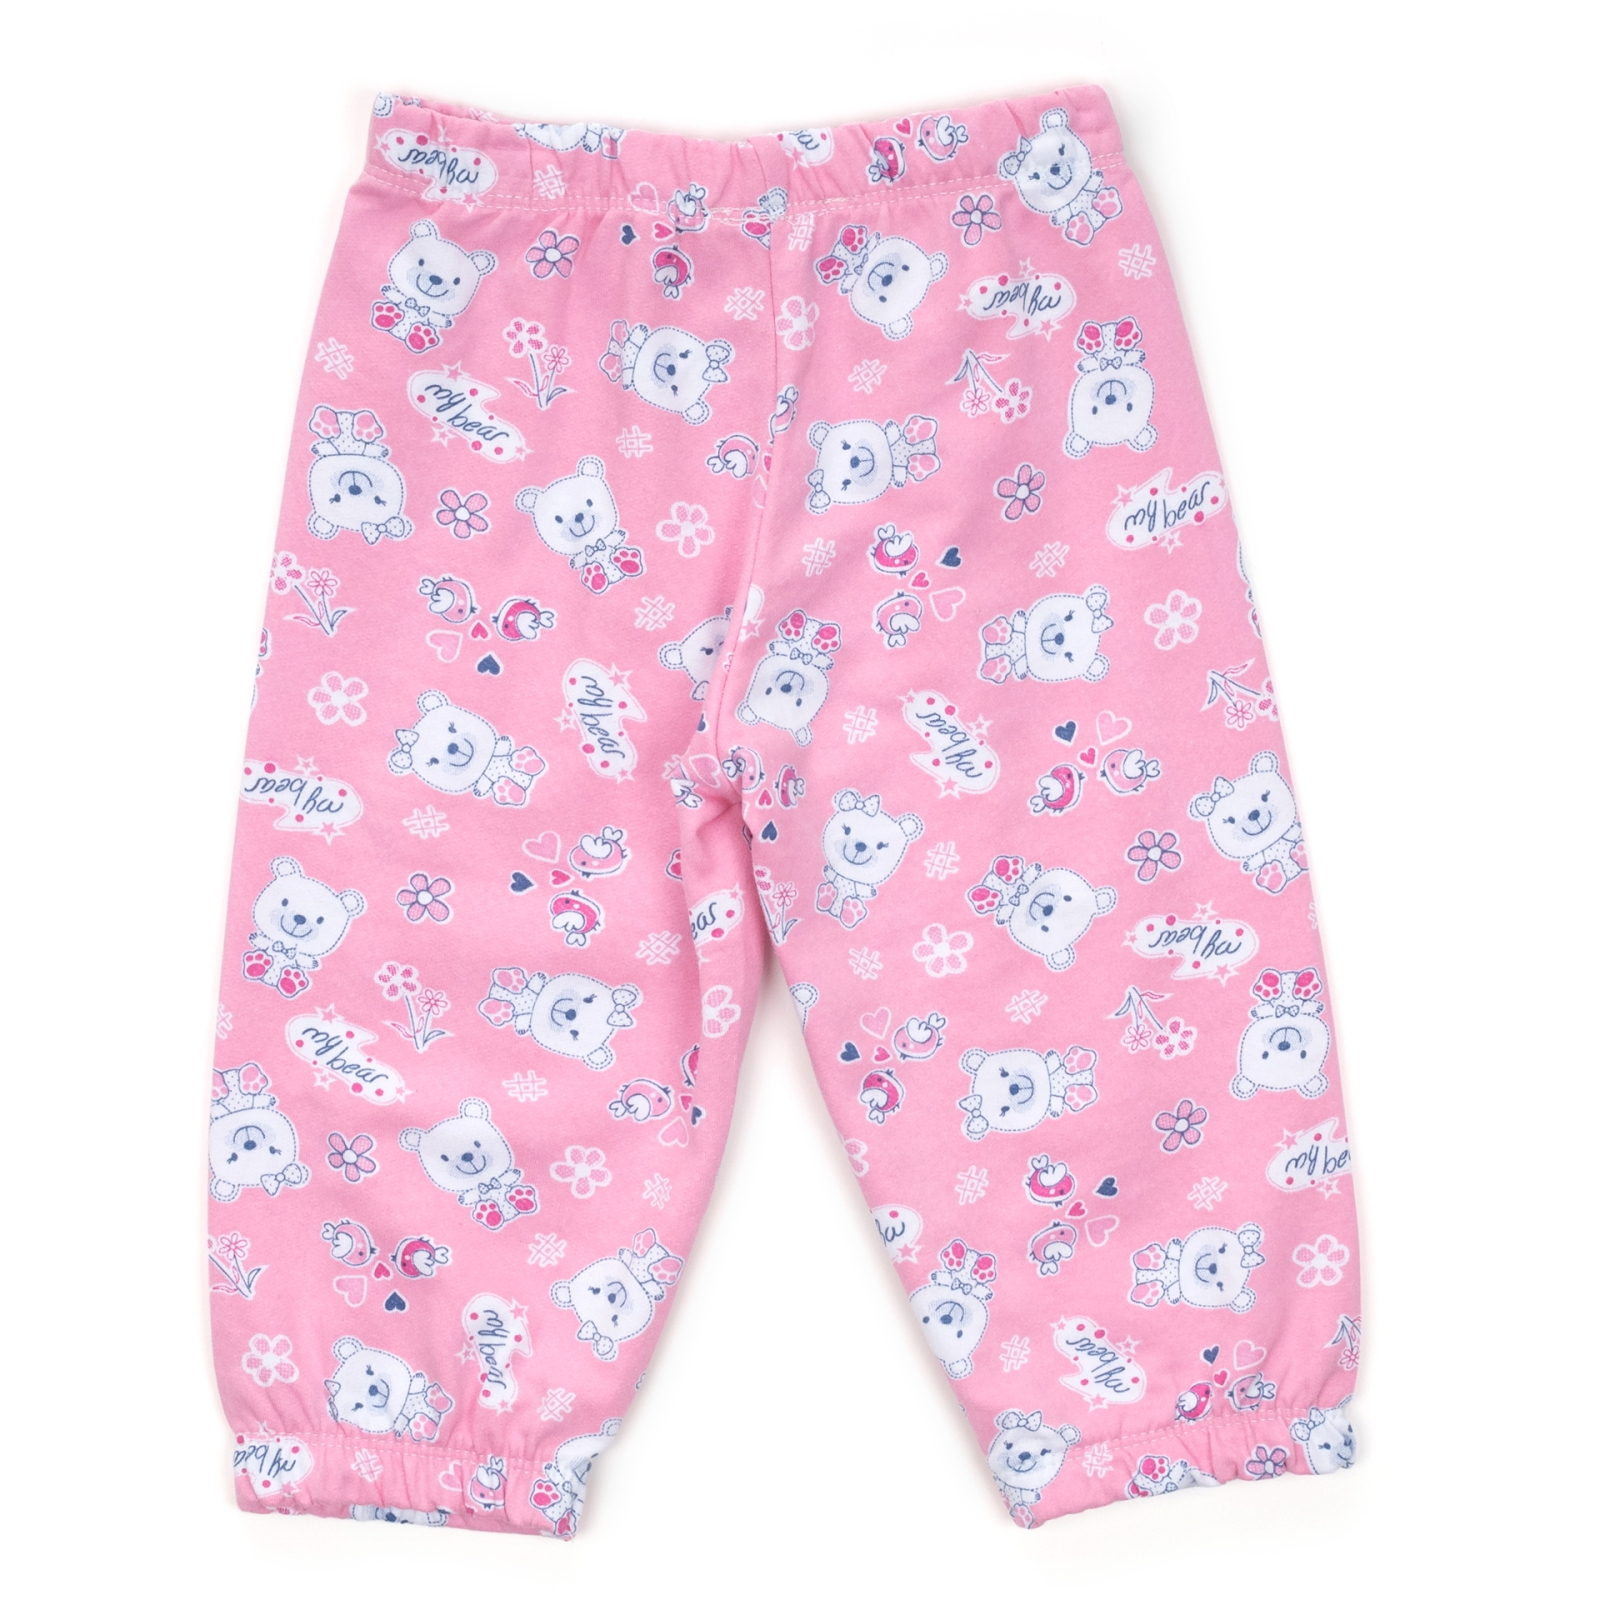 Пижама Breeze с мишками (8382-86G-pink) изображение 6